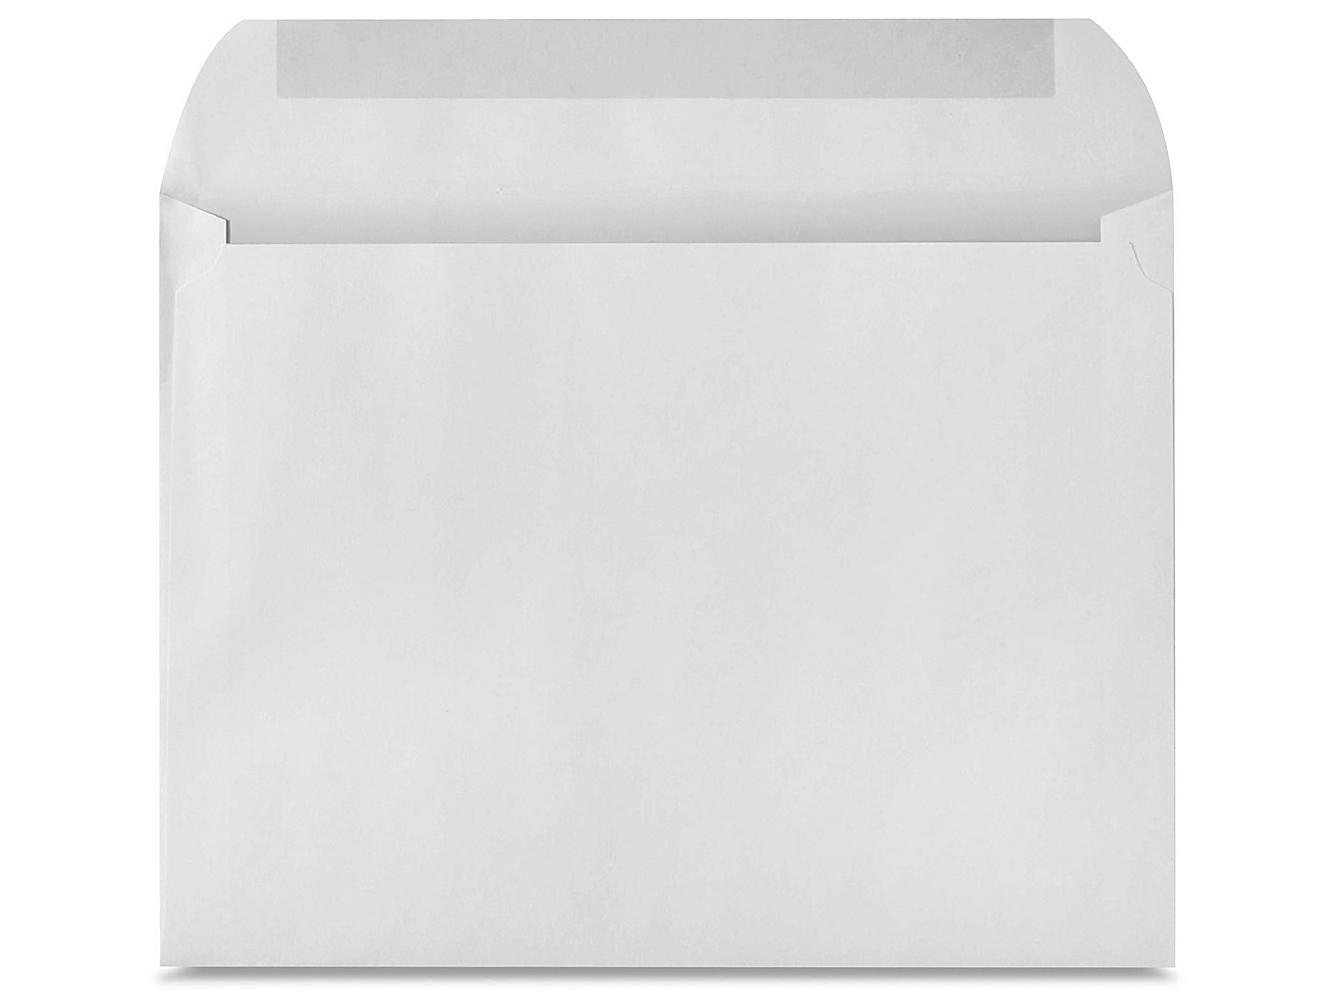 booklet-gummed-envelopes-white-12-x-9-s-7799-uline